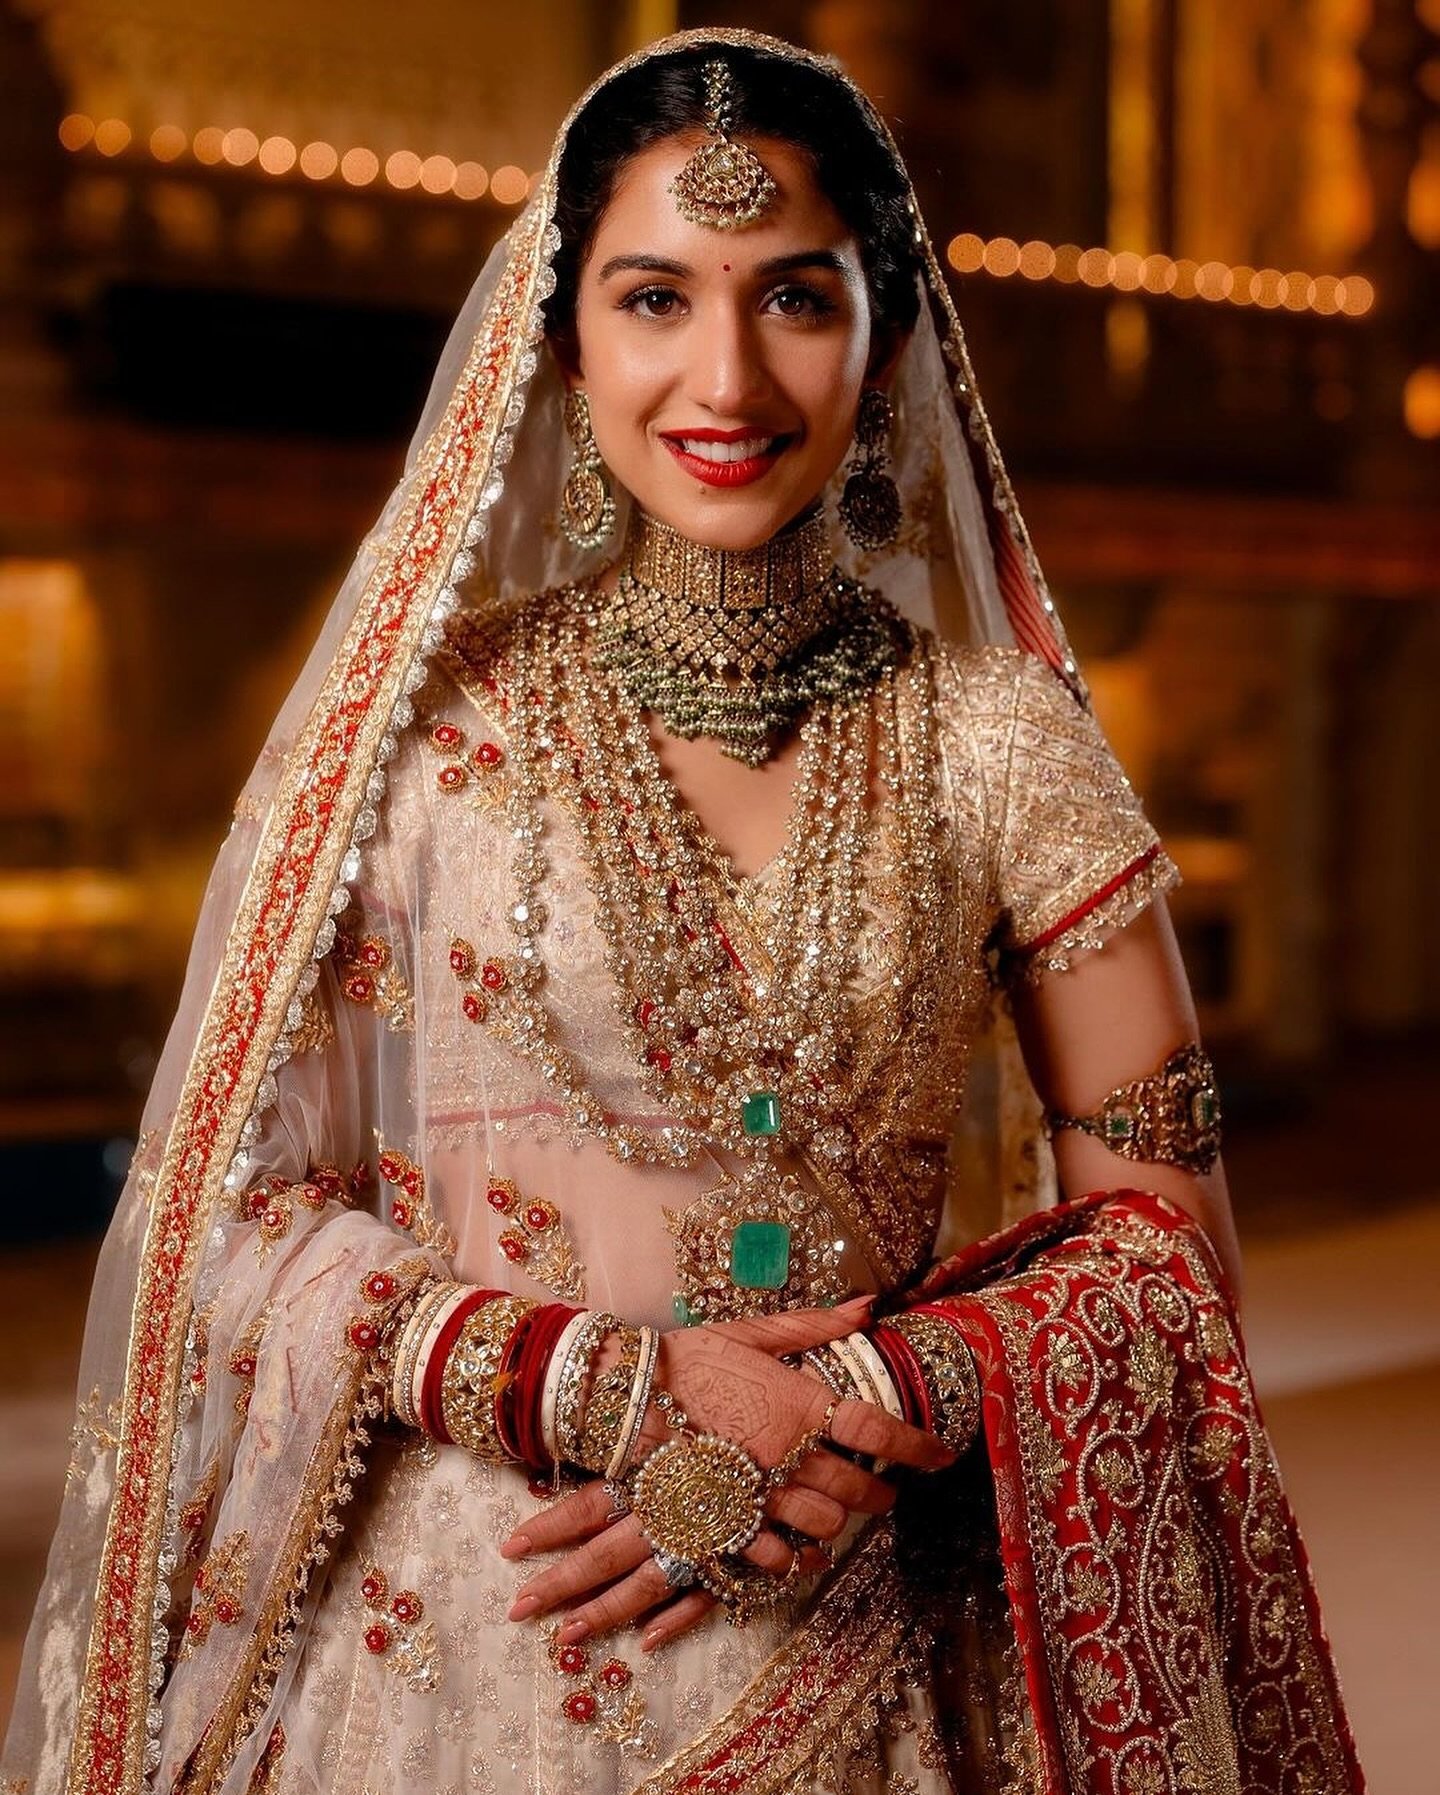 Vestido de Radhika Merchant no primeiro dia de casamento